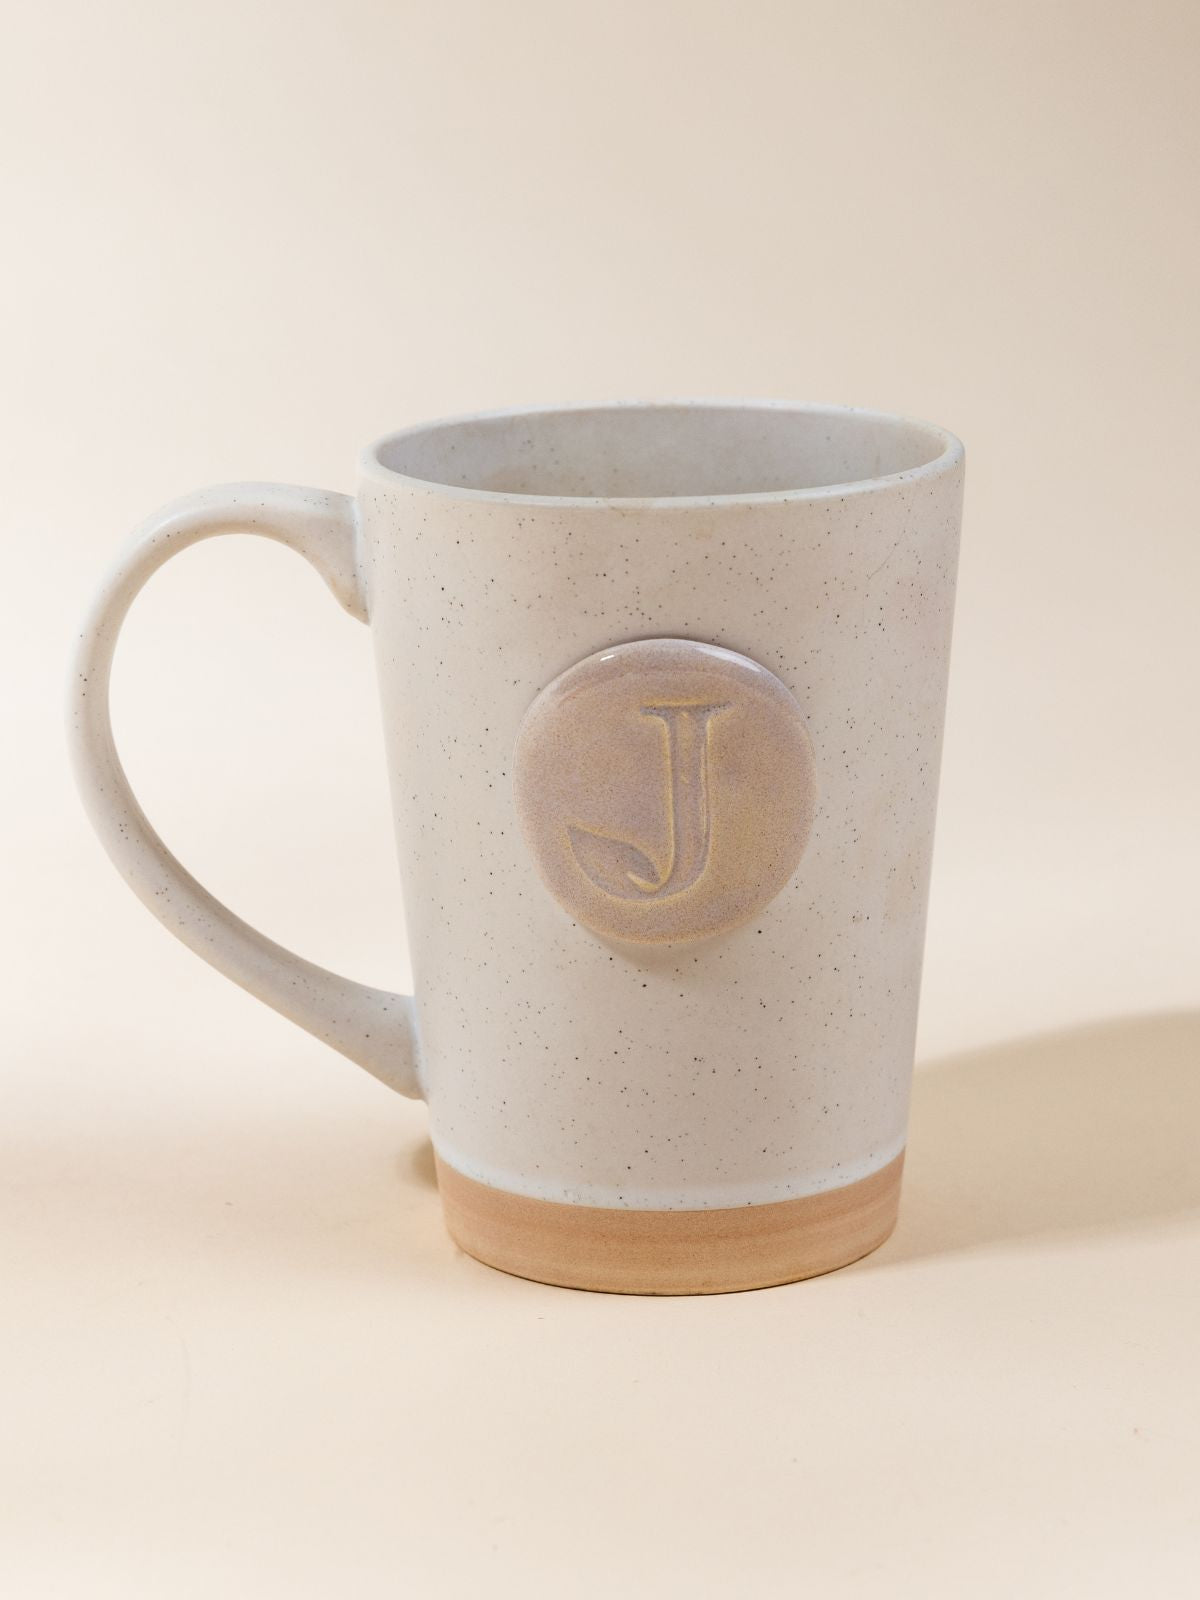 Customizable 16oz white speckled mug on customizable square leather coaster.